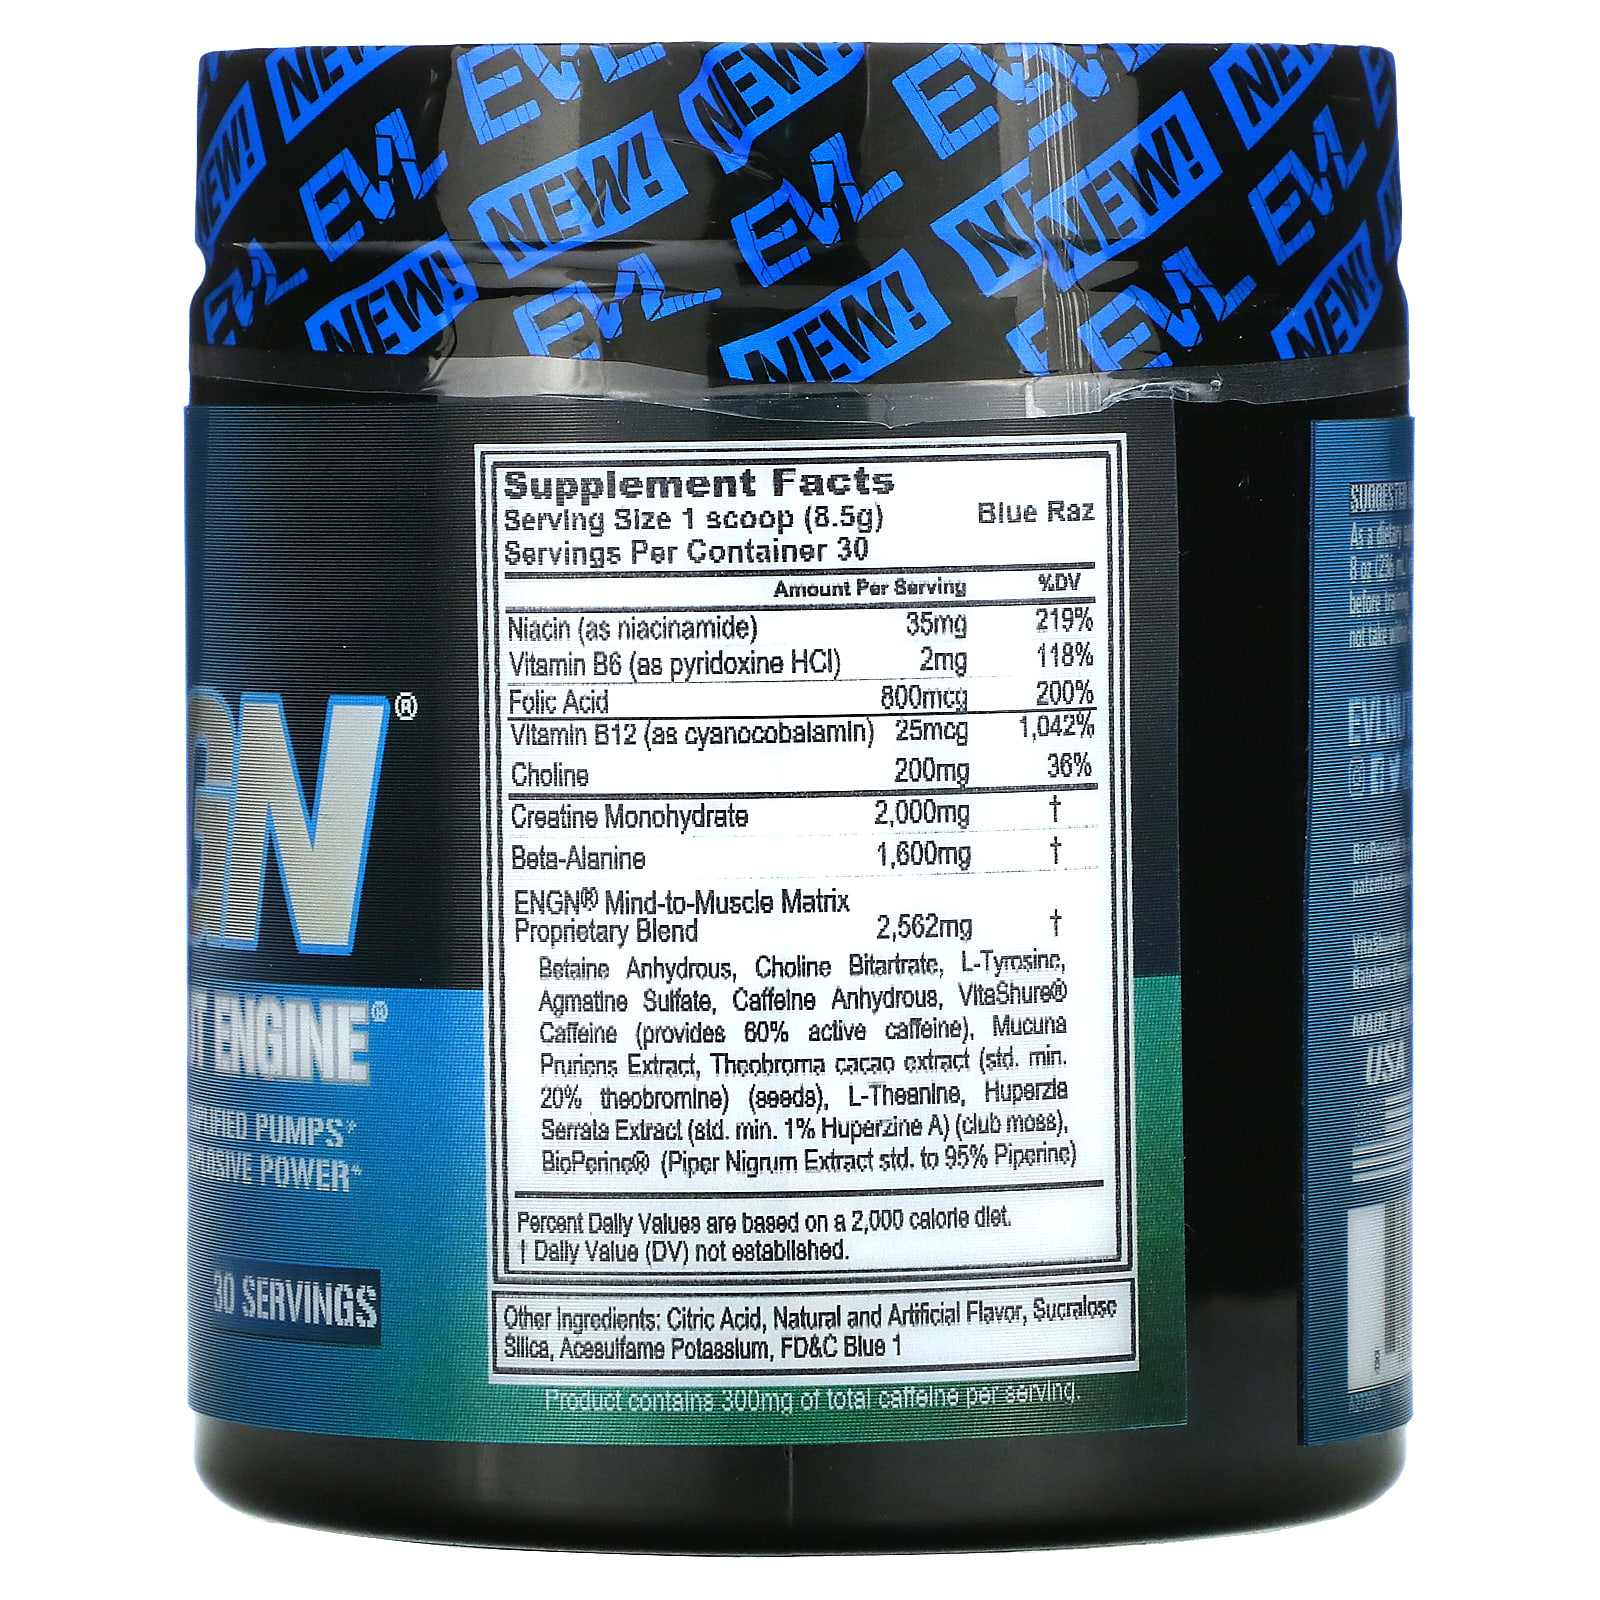 ENGN-Pre-workout-Engine-Blue-Raz-Flavor-9-oz-255-g-EVLution-Nutrition-1.jpg